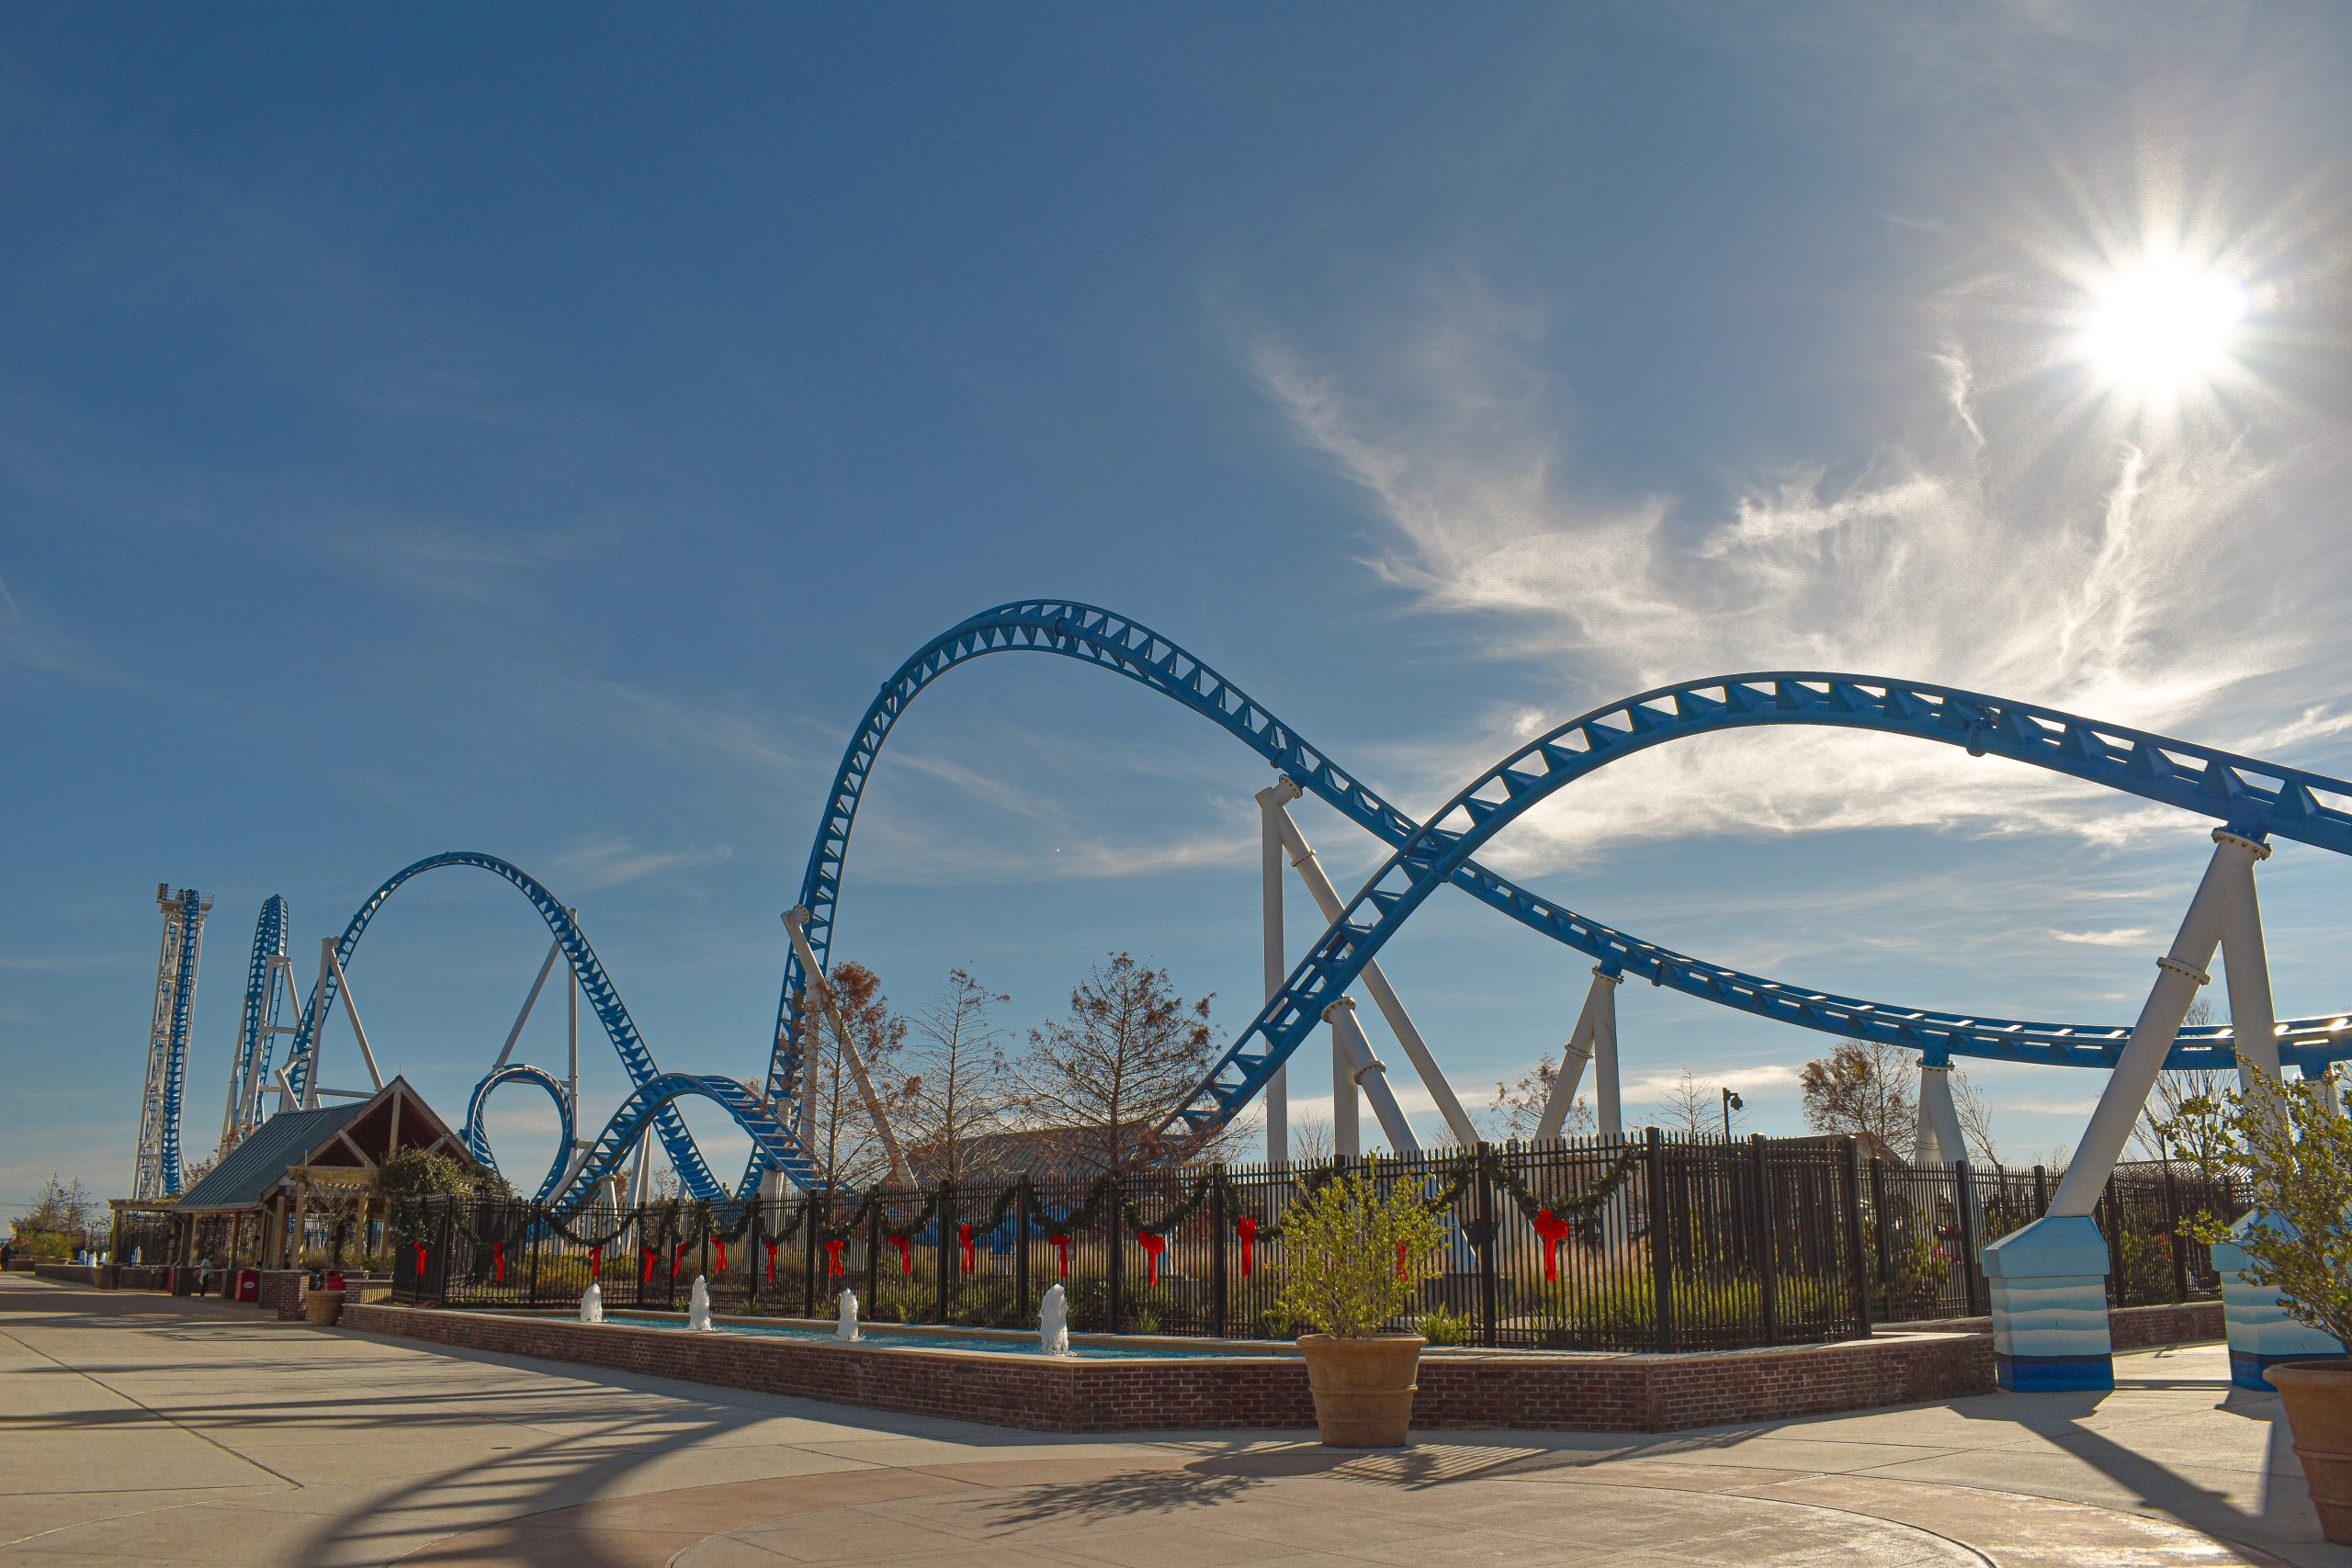 Twister Amusement Ride – Park at OWA, Foley AL